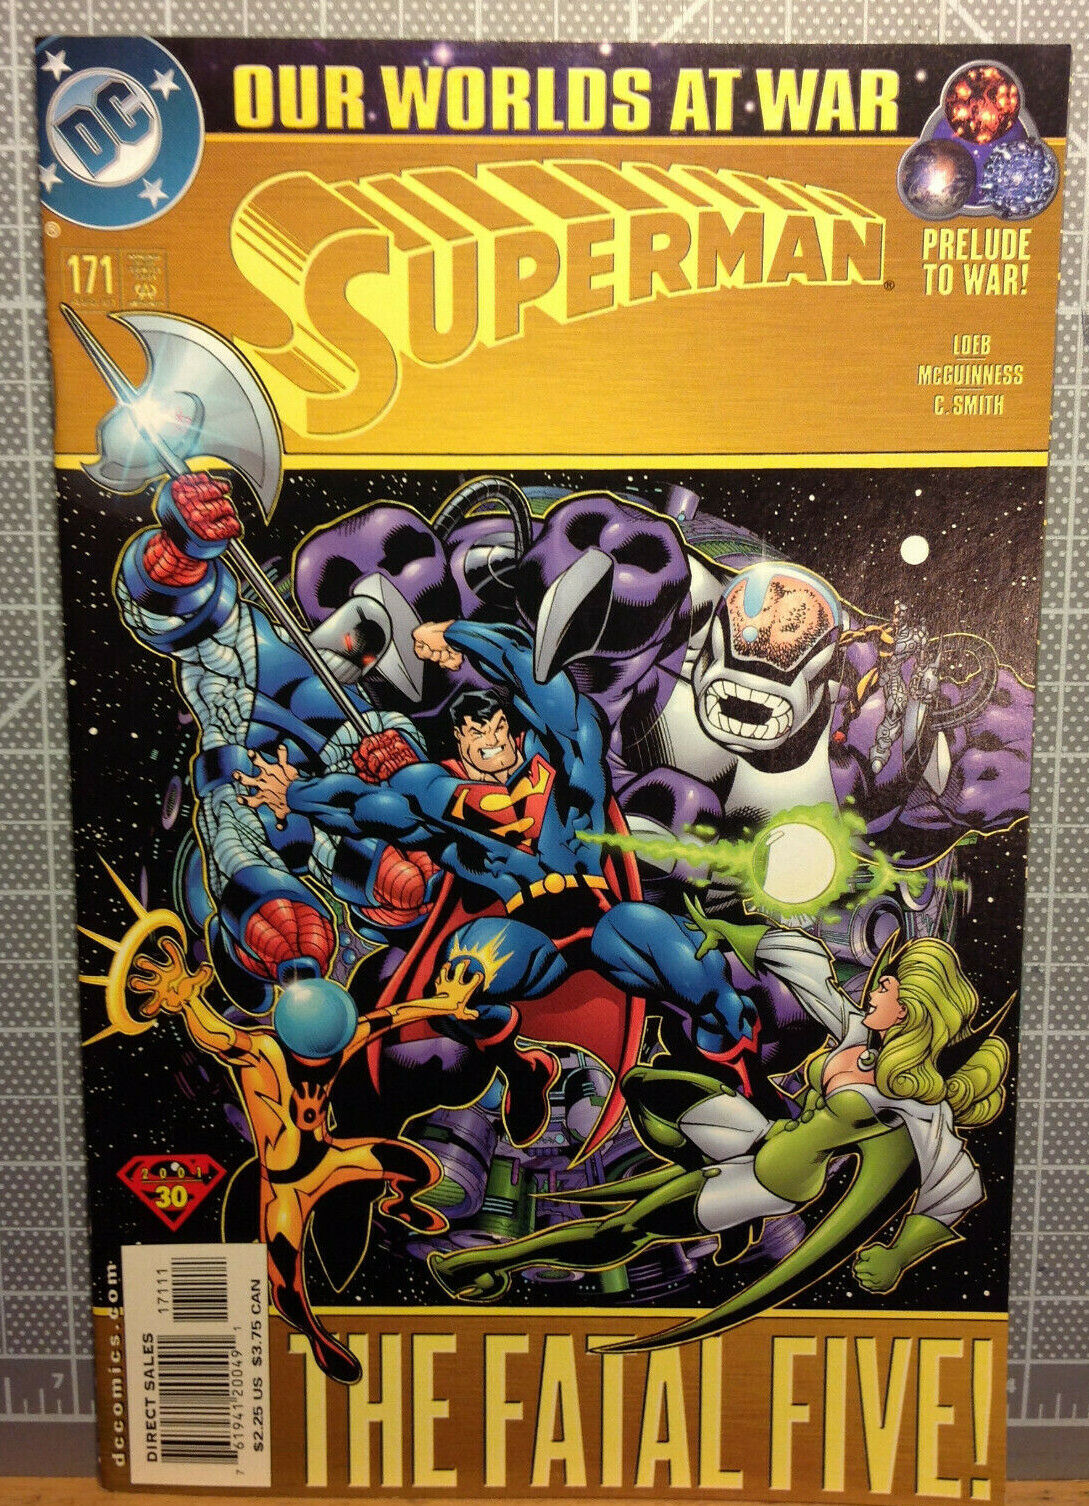 Superman (DC Comics) Vol 2 #171 VF Jeff Loeb, Ed McGuinness The Fatal Five